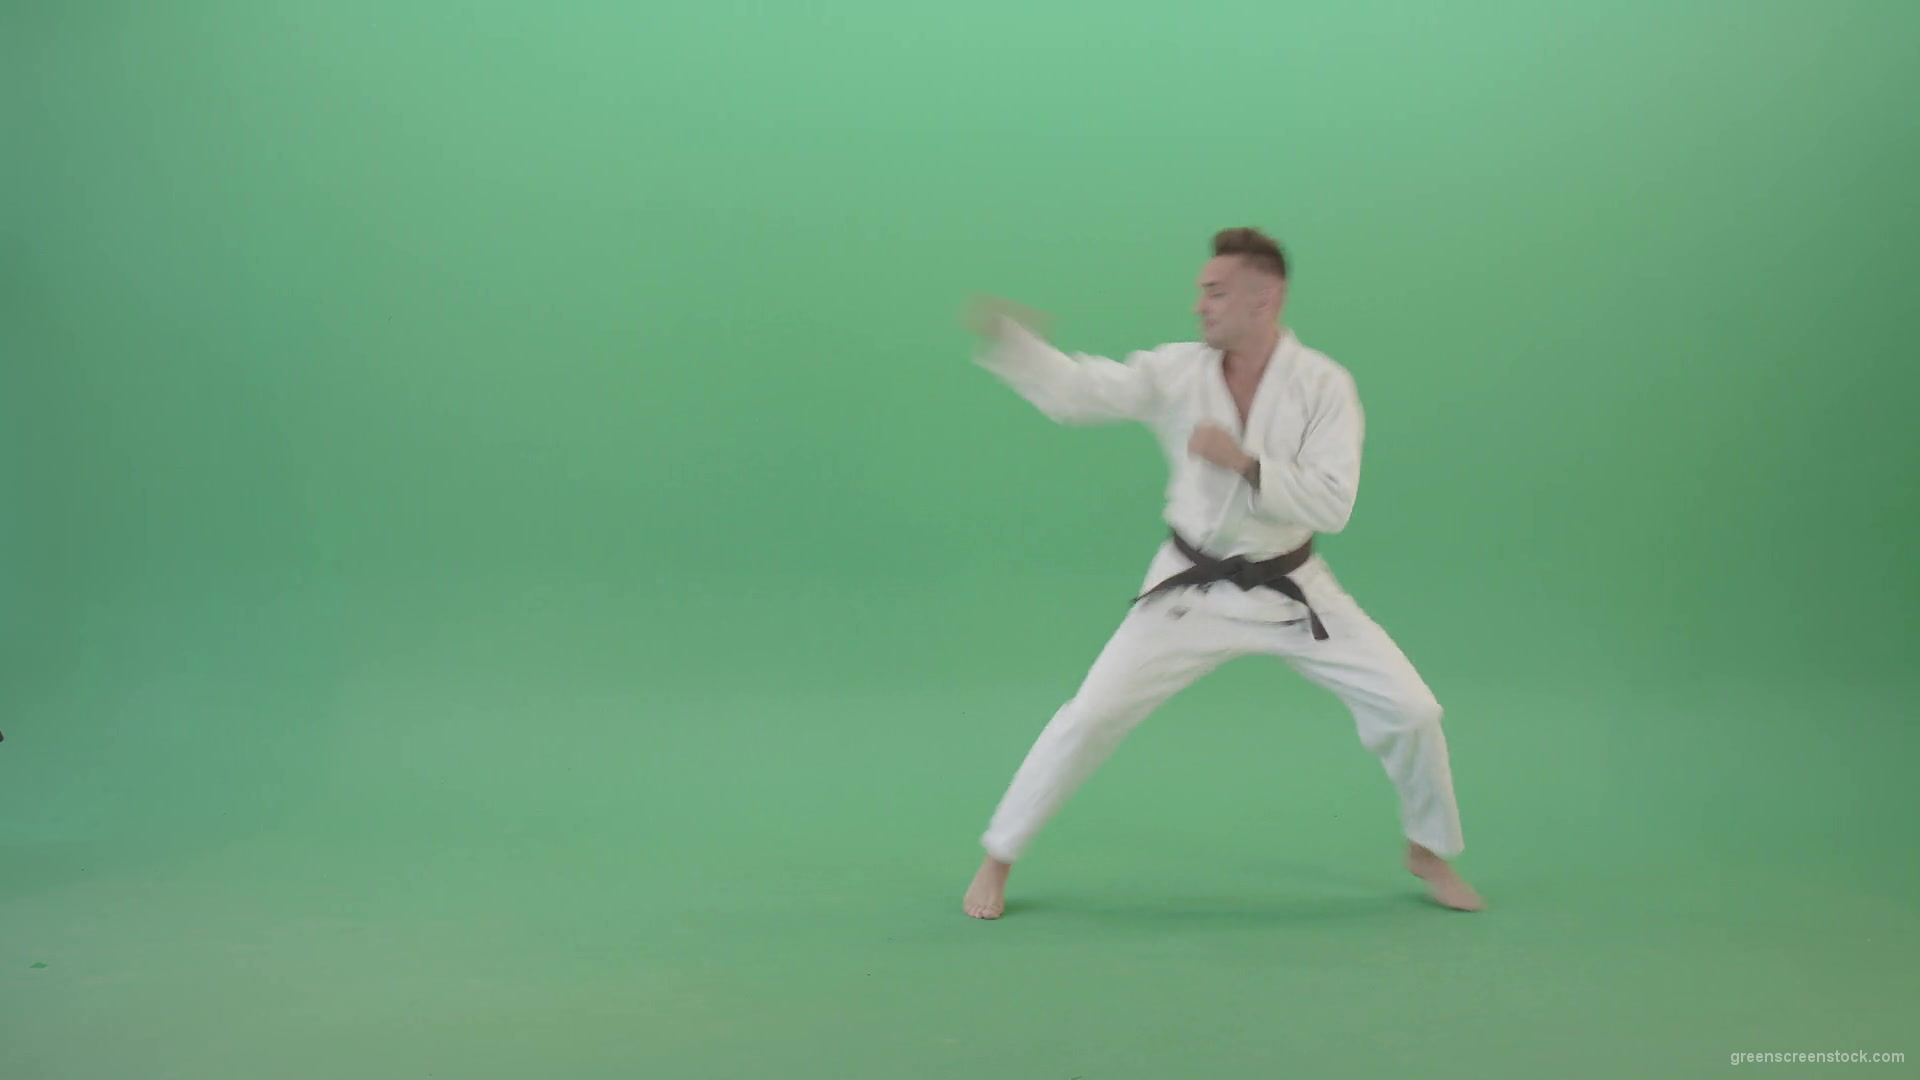 Mortal-Kombat-by-Karate-Ju-Jutsu-trainer-sportsman-isolated-on-green-screen-4K-Video-Footage-1920_004 Green Screen Stock